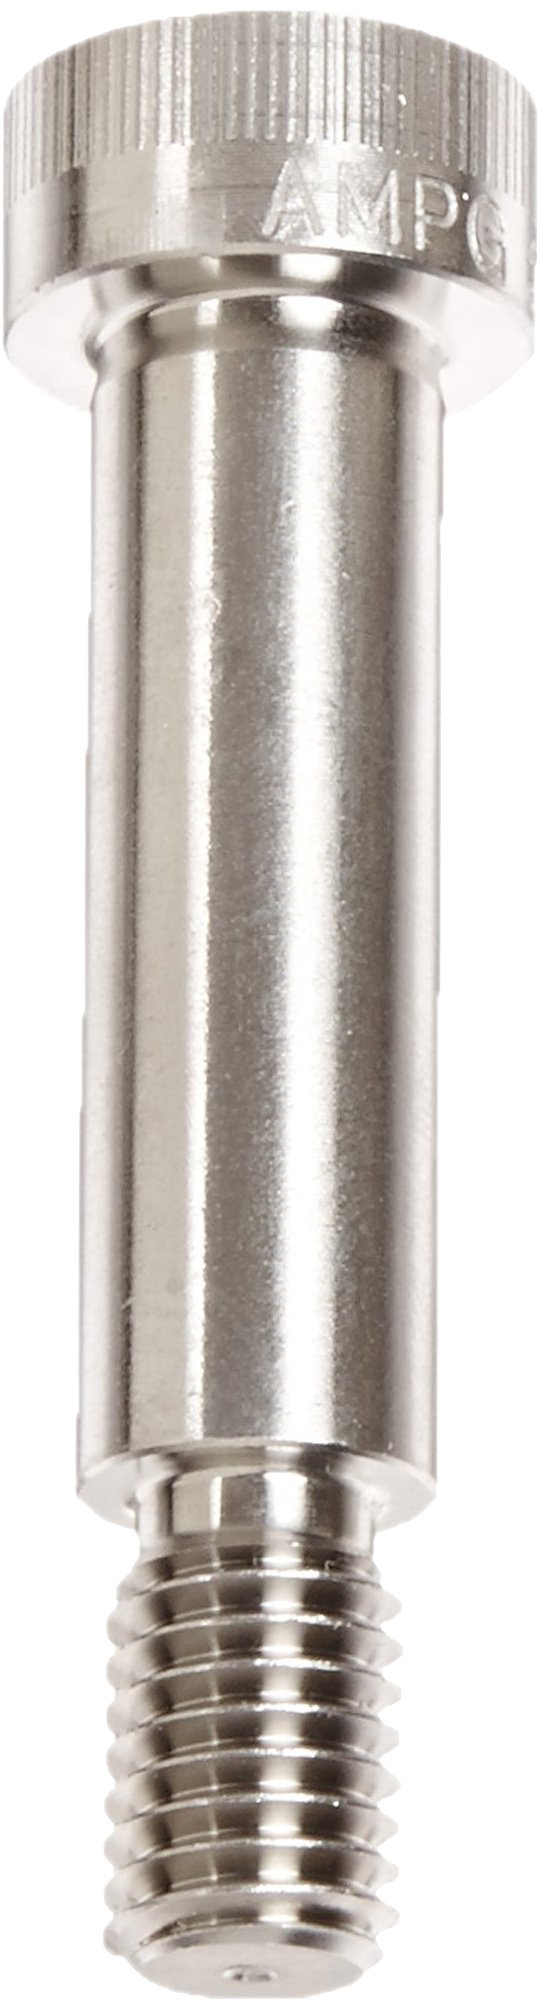 [Australia - AusPower] - 316 Stainless Steel Shoulder Screw, Plain Finish, Socket Head Cap, Hex Socket Drive, Standard Tolerance, Meets ASME B18.3, 1/4" Shoulder Diameter, 5/8" Shoulder Length, Partially Threaded, #10-32 Threads, 1/4" Thread Length, Made in US, (Pack of 1) 